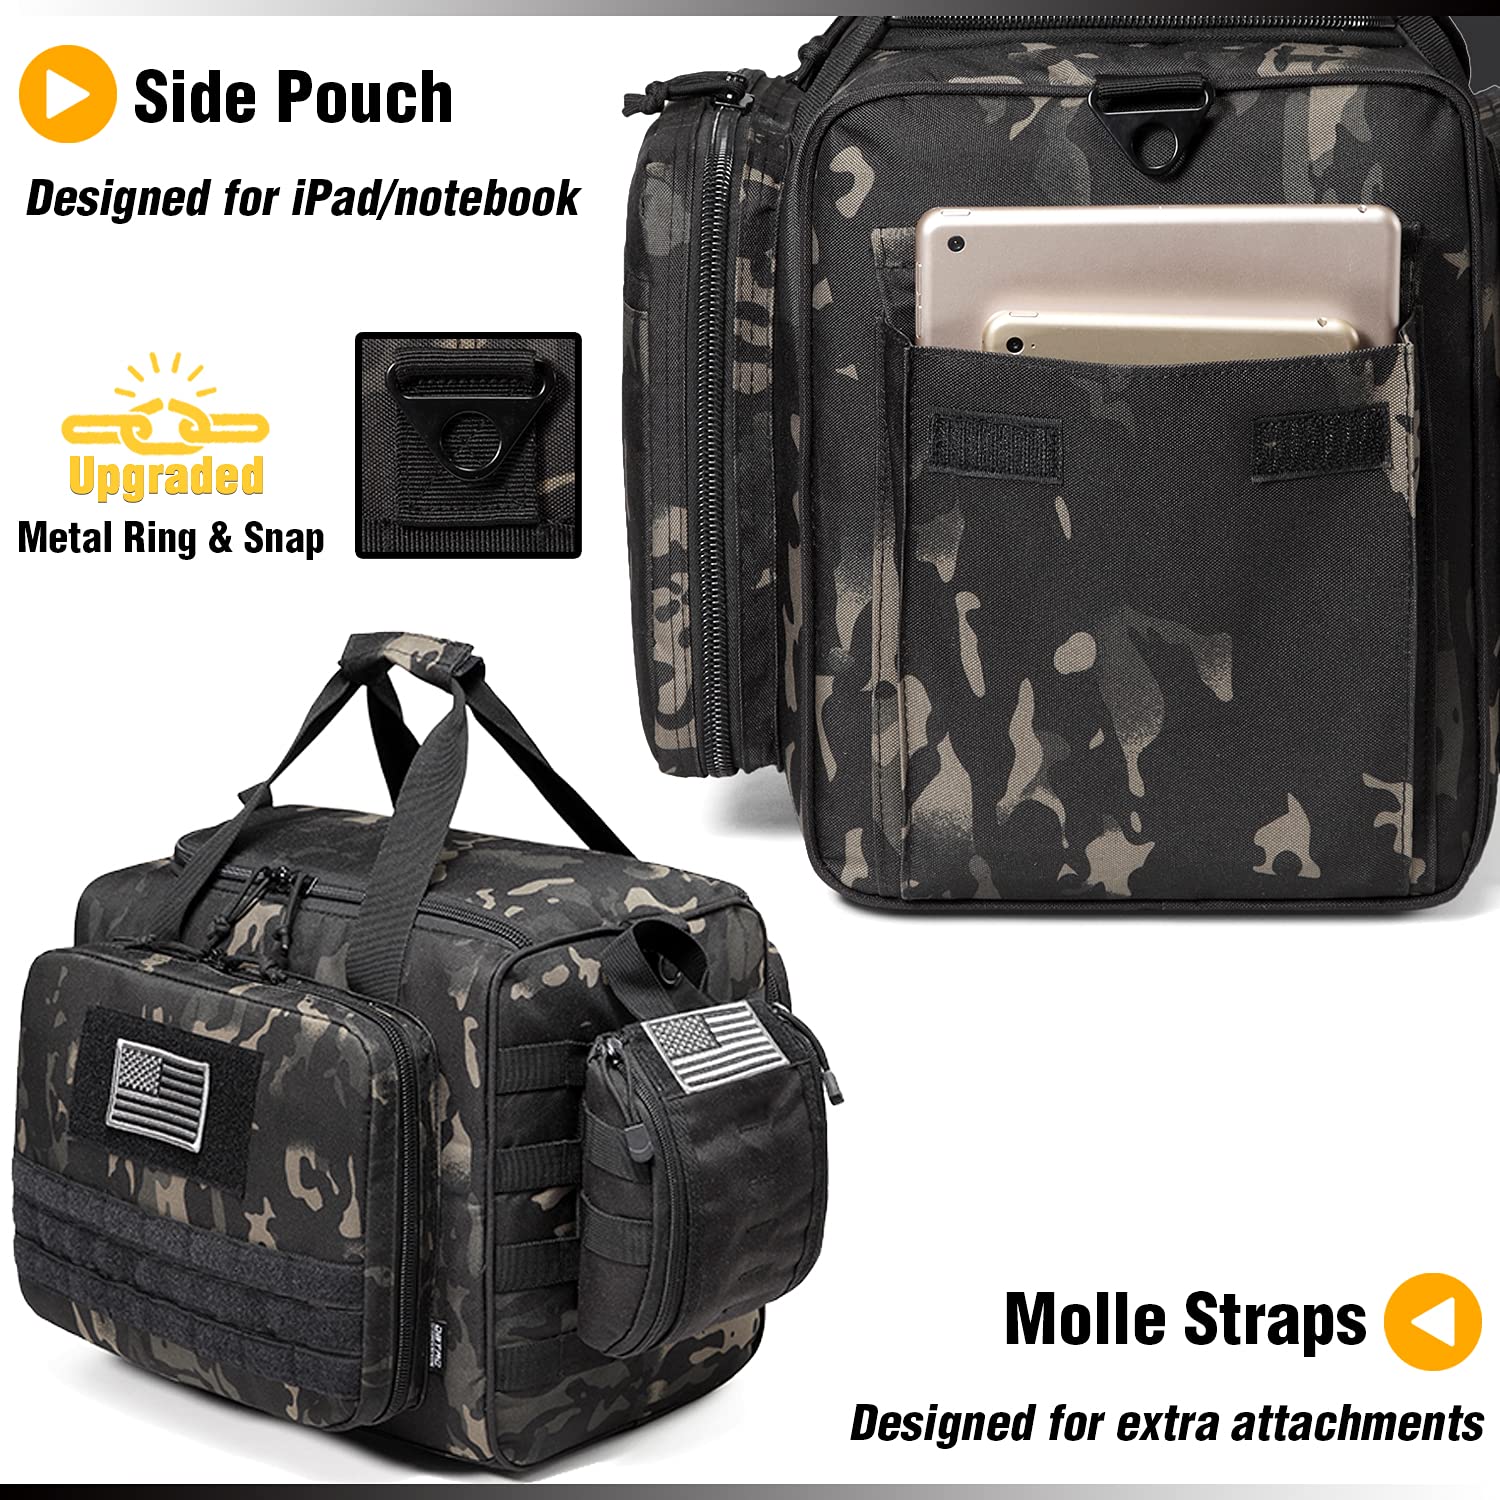 DBTAC Gun Range Bag Large | Tactical 4+ Pistol Shooting Range Duffle Bag for Handguns and Ammo with 2X Removable Hook & Loop Divider for DSLR | US Flag Patch + Universal Holster Included (Black Camo)